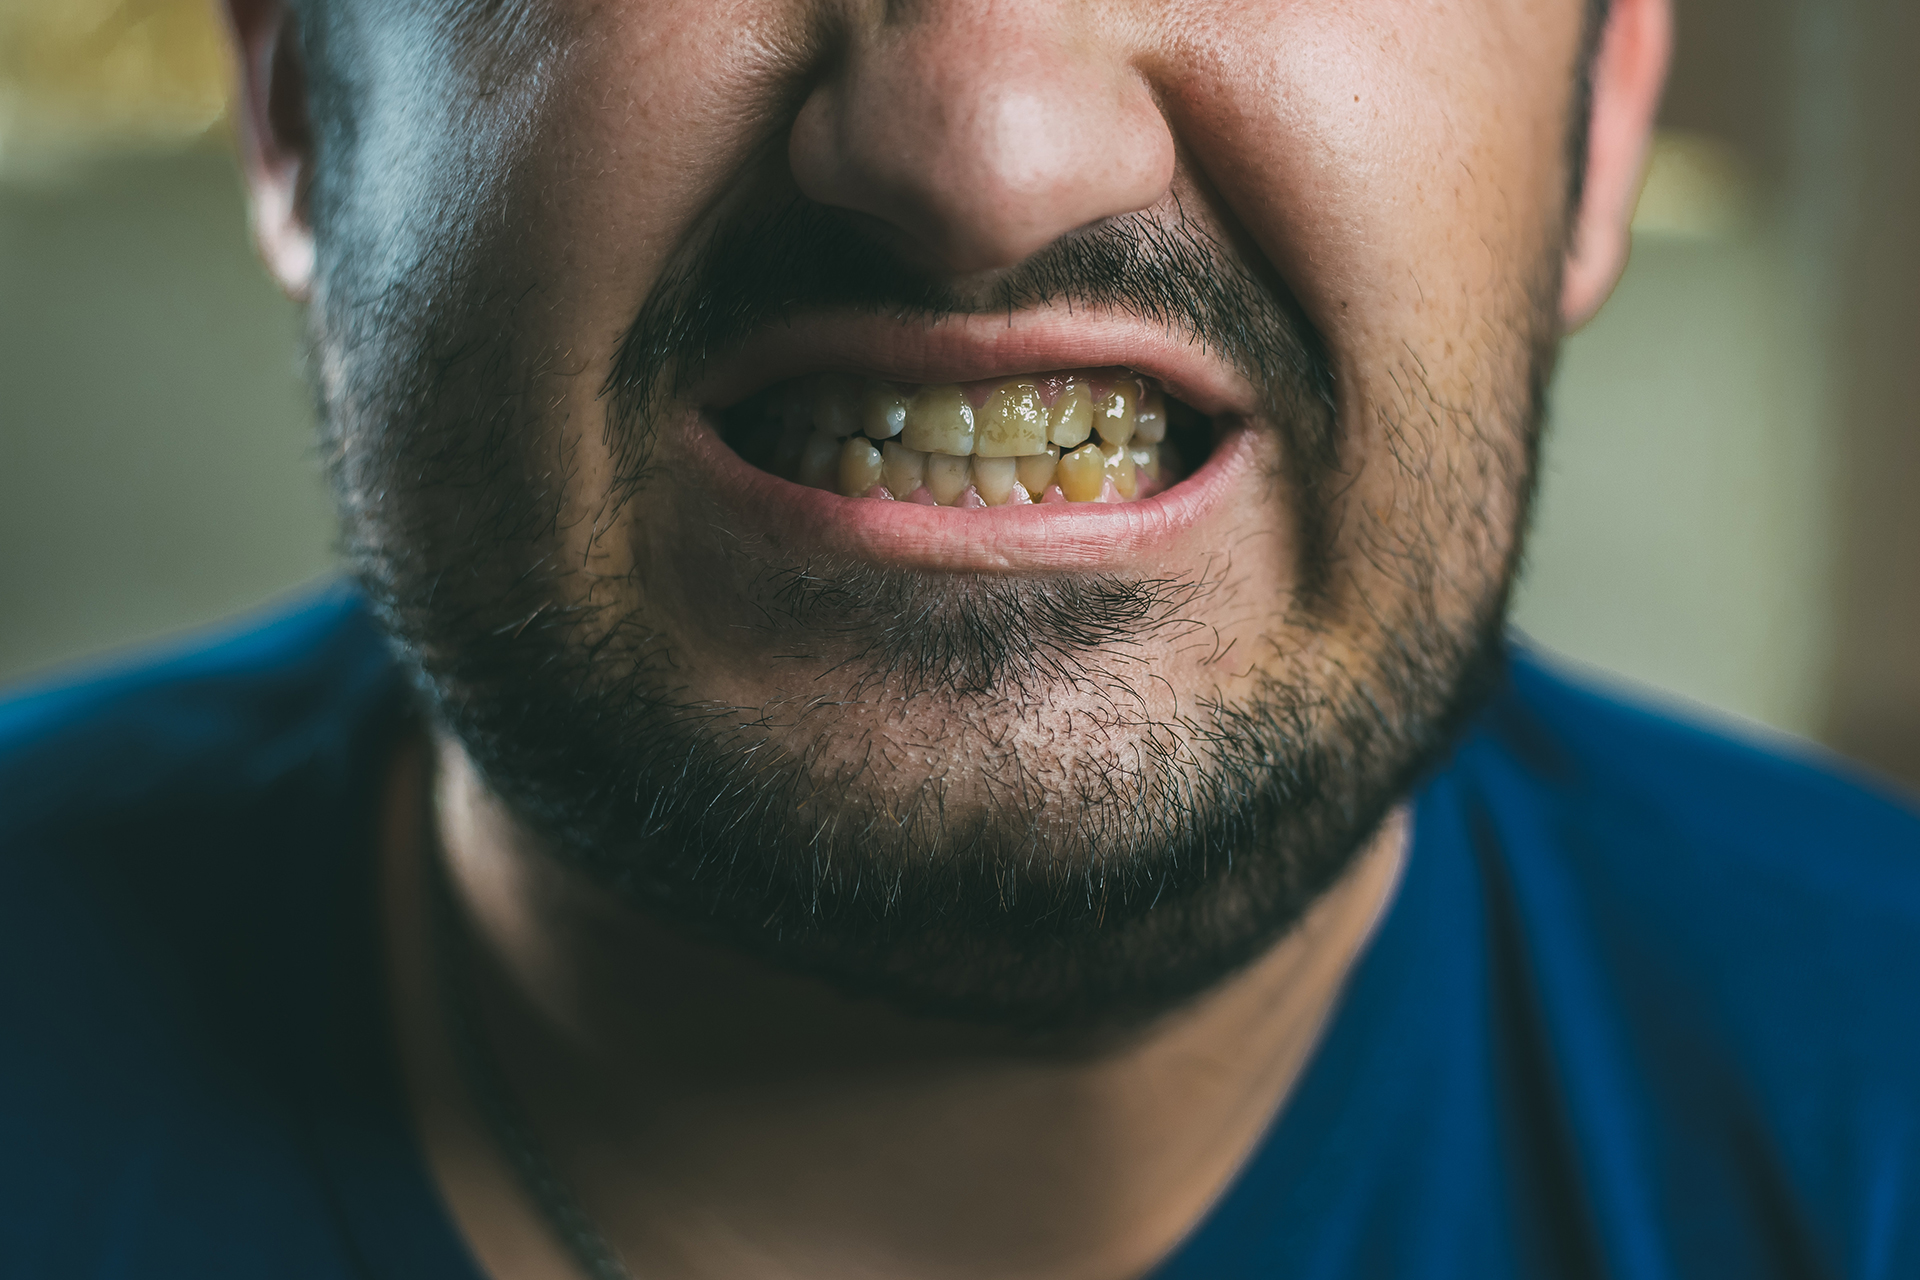 man with yellow teeth